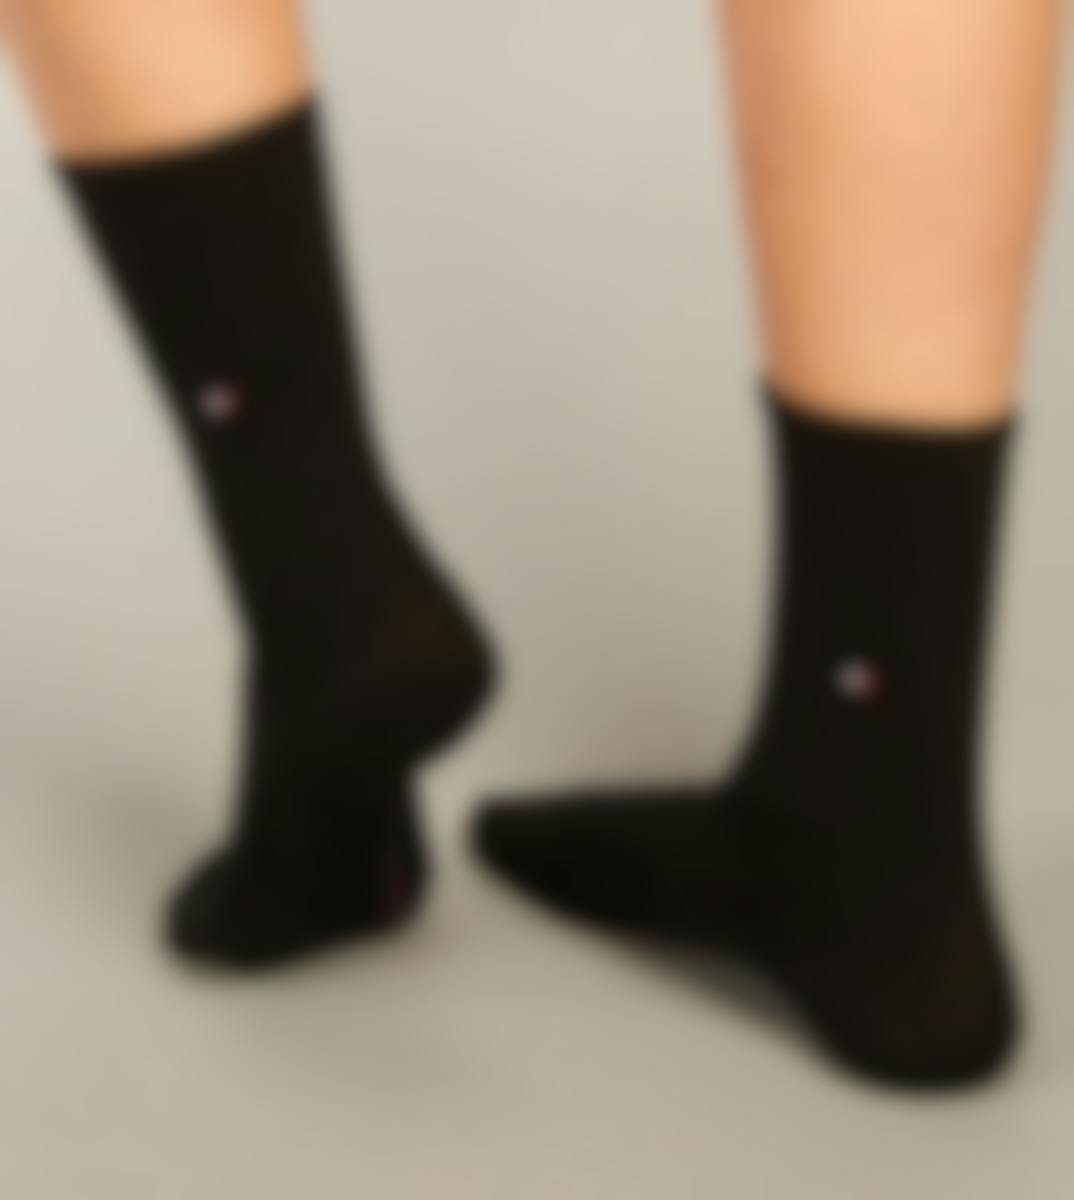 Tommy Hilfiger chaussettes 4 paires Womens Sock D